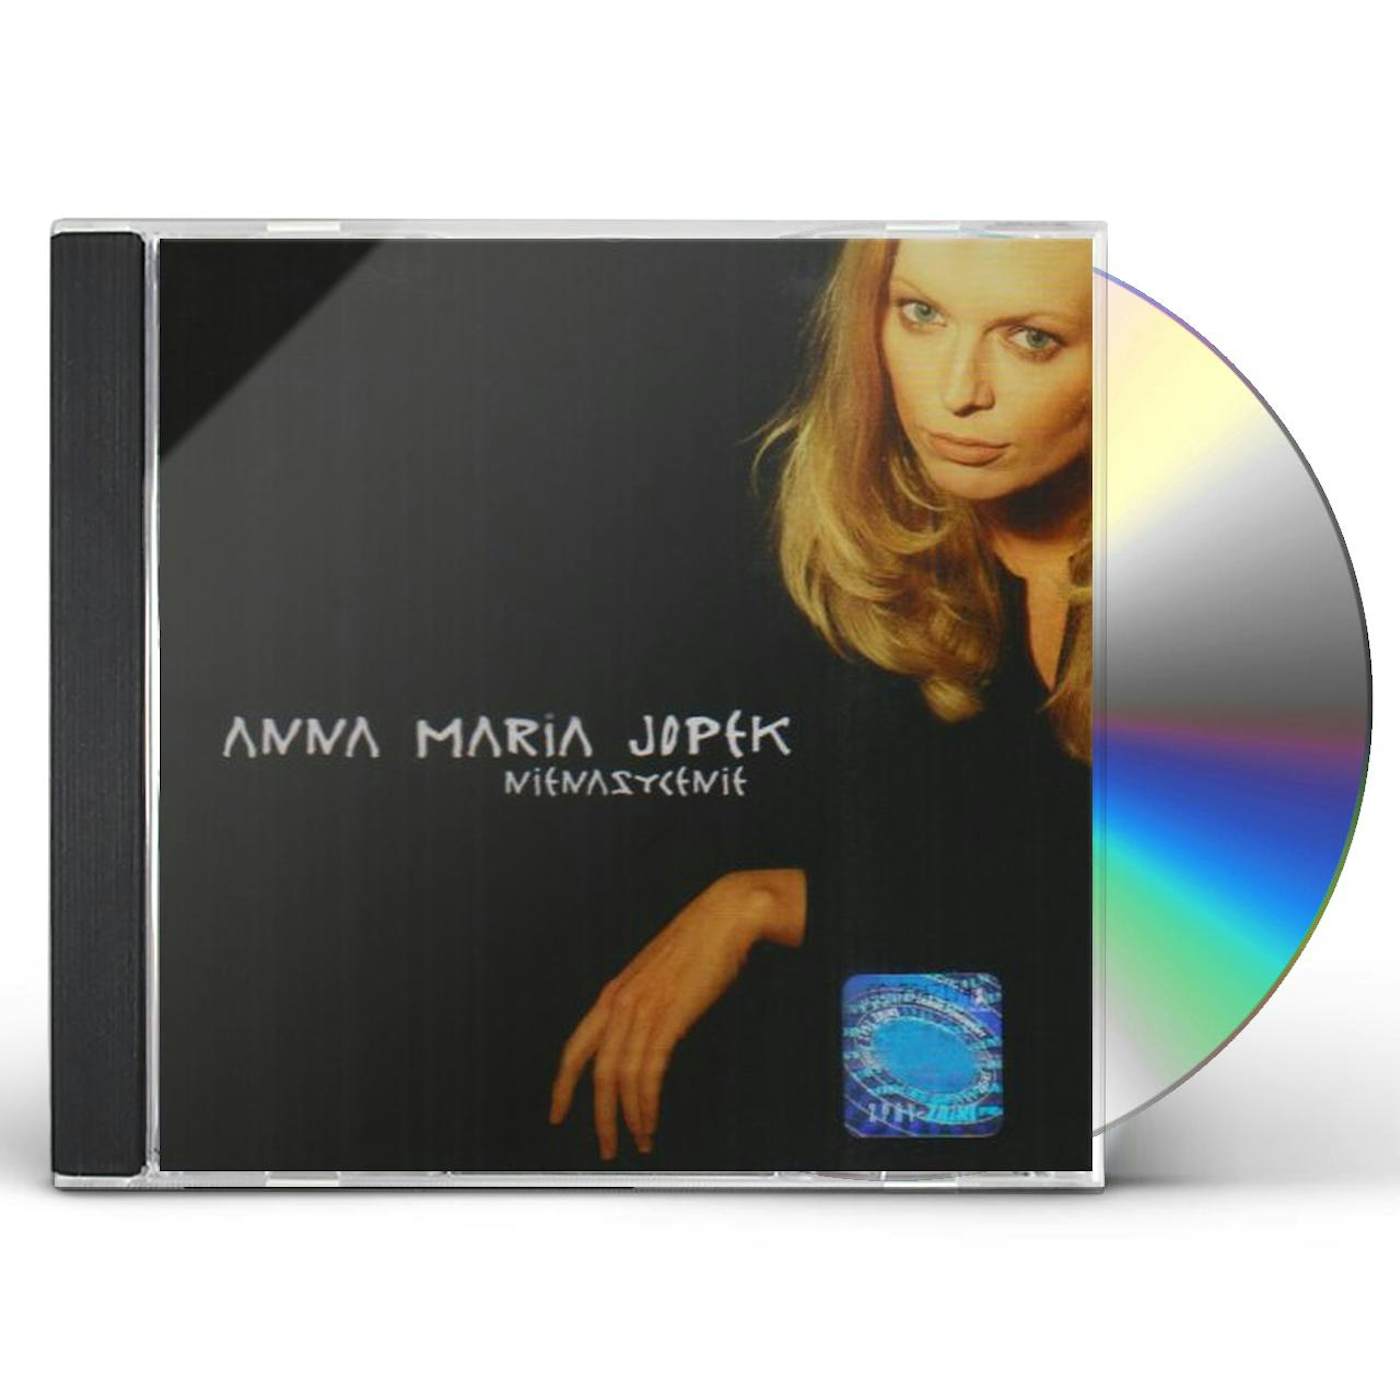 Anna Maria Jopek NIENASYCENIE CD